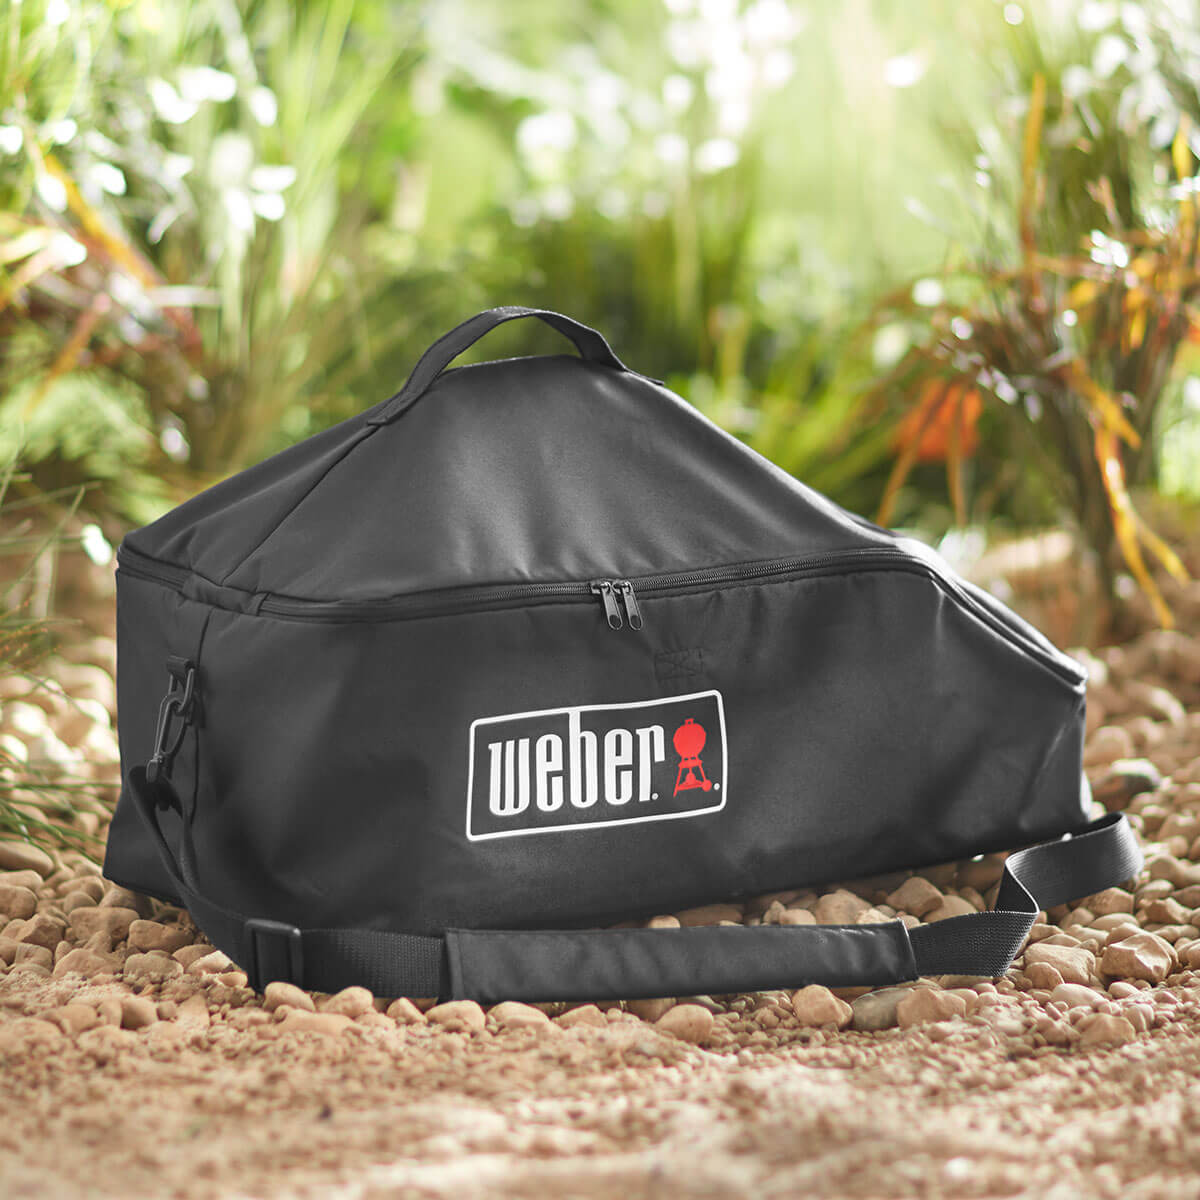 Weber Premium Go-Anywhere Carry Bag